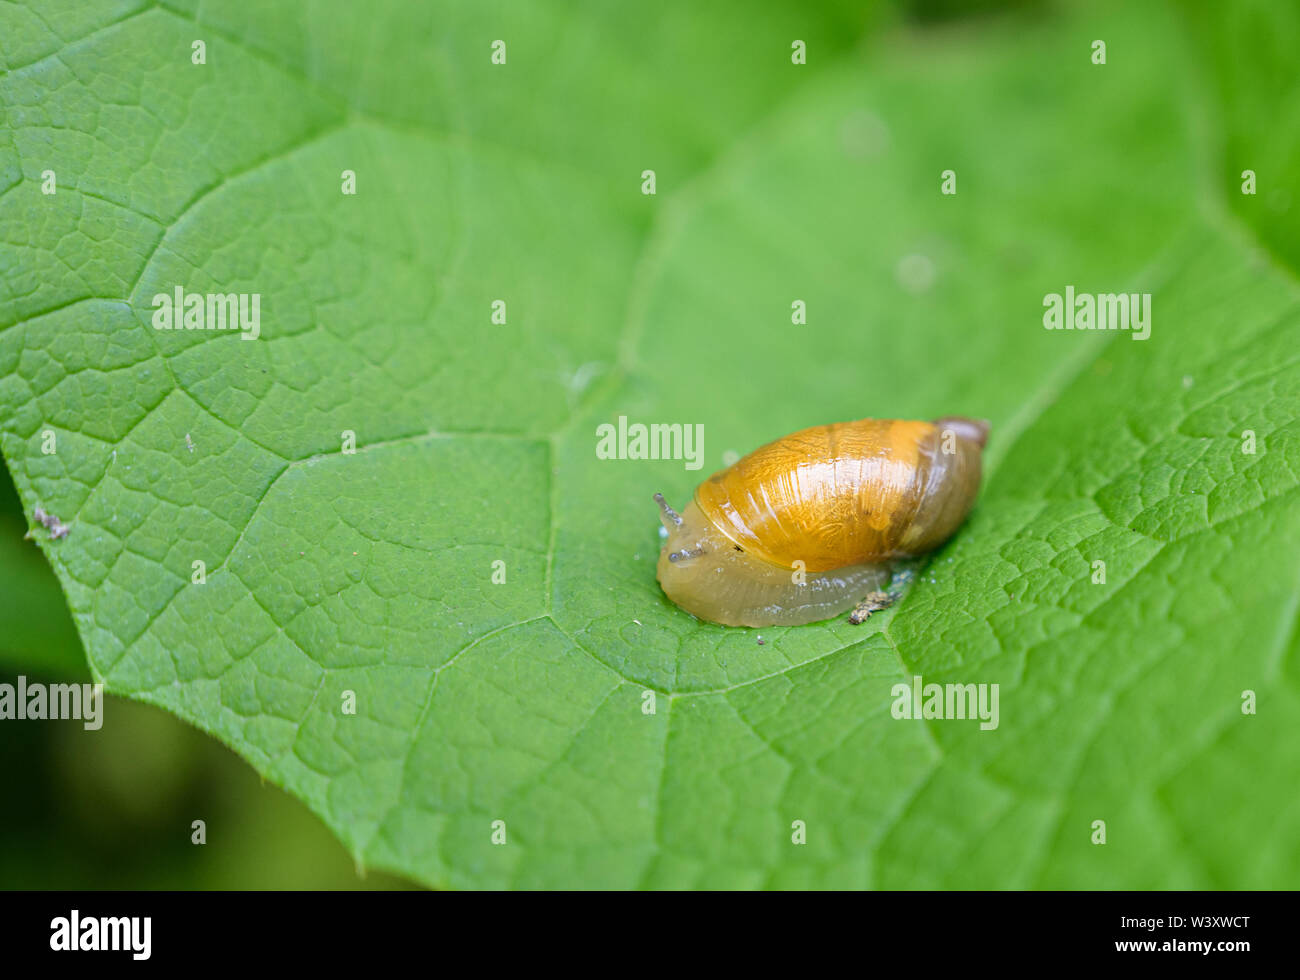 Succinea putris or Amber Snail on green leaf. Stock Photo